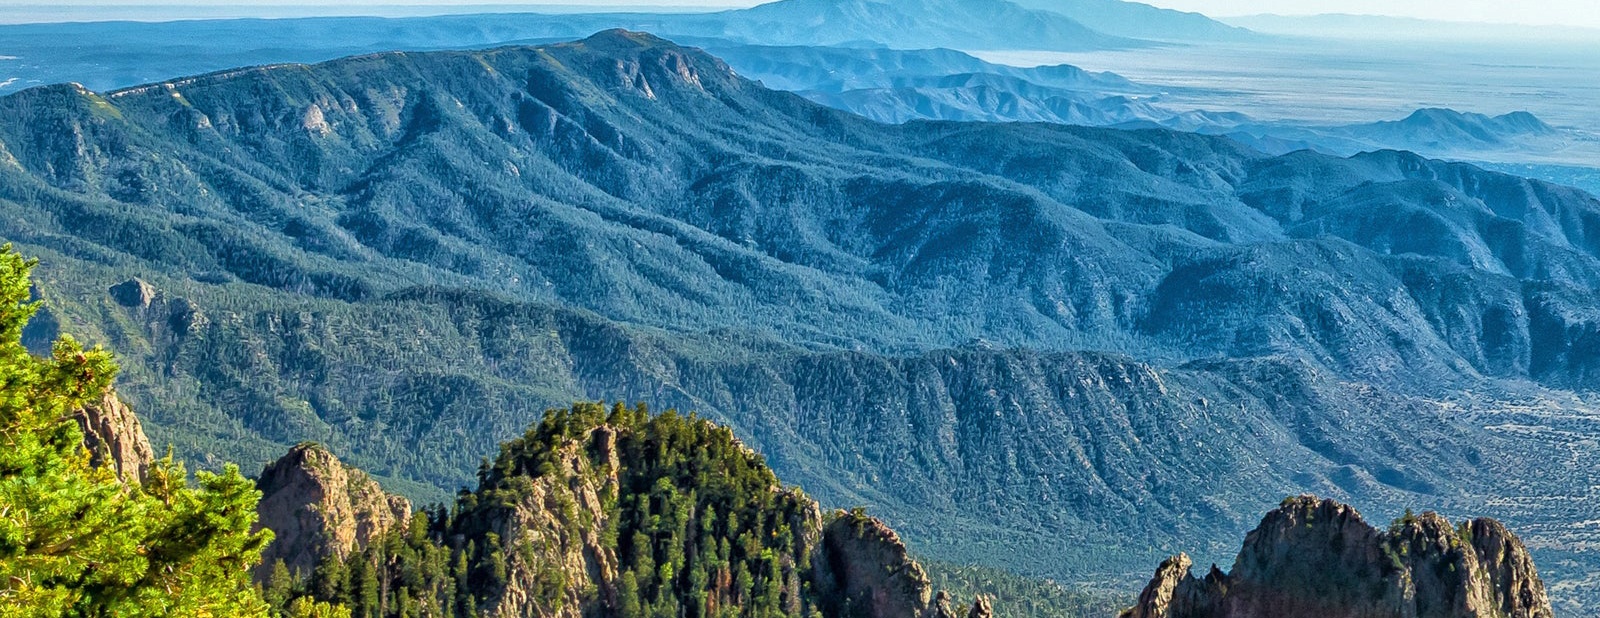 View of the mountains around Albuquerque